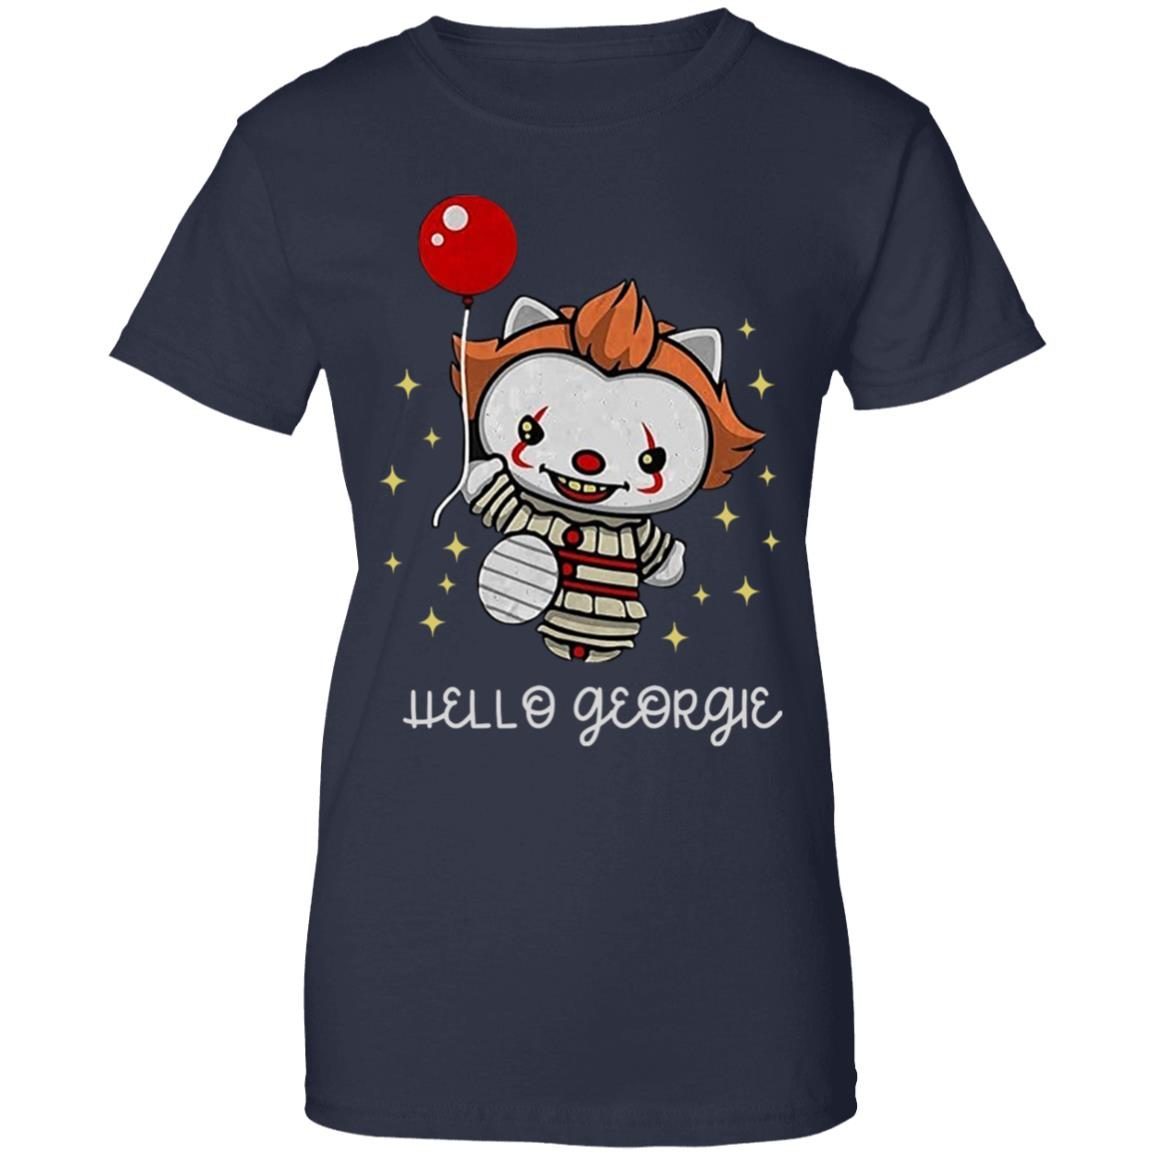 Kitty Pennywise Hello Georgie